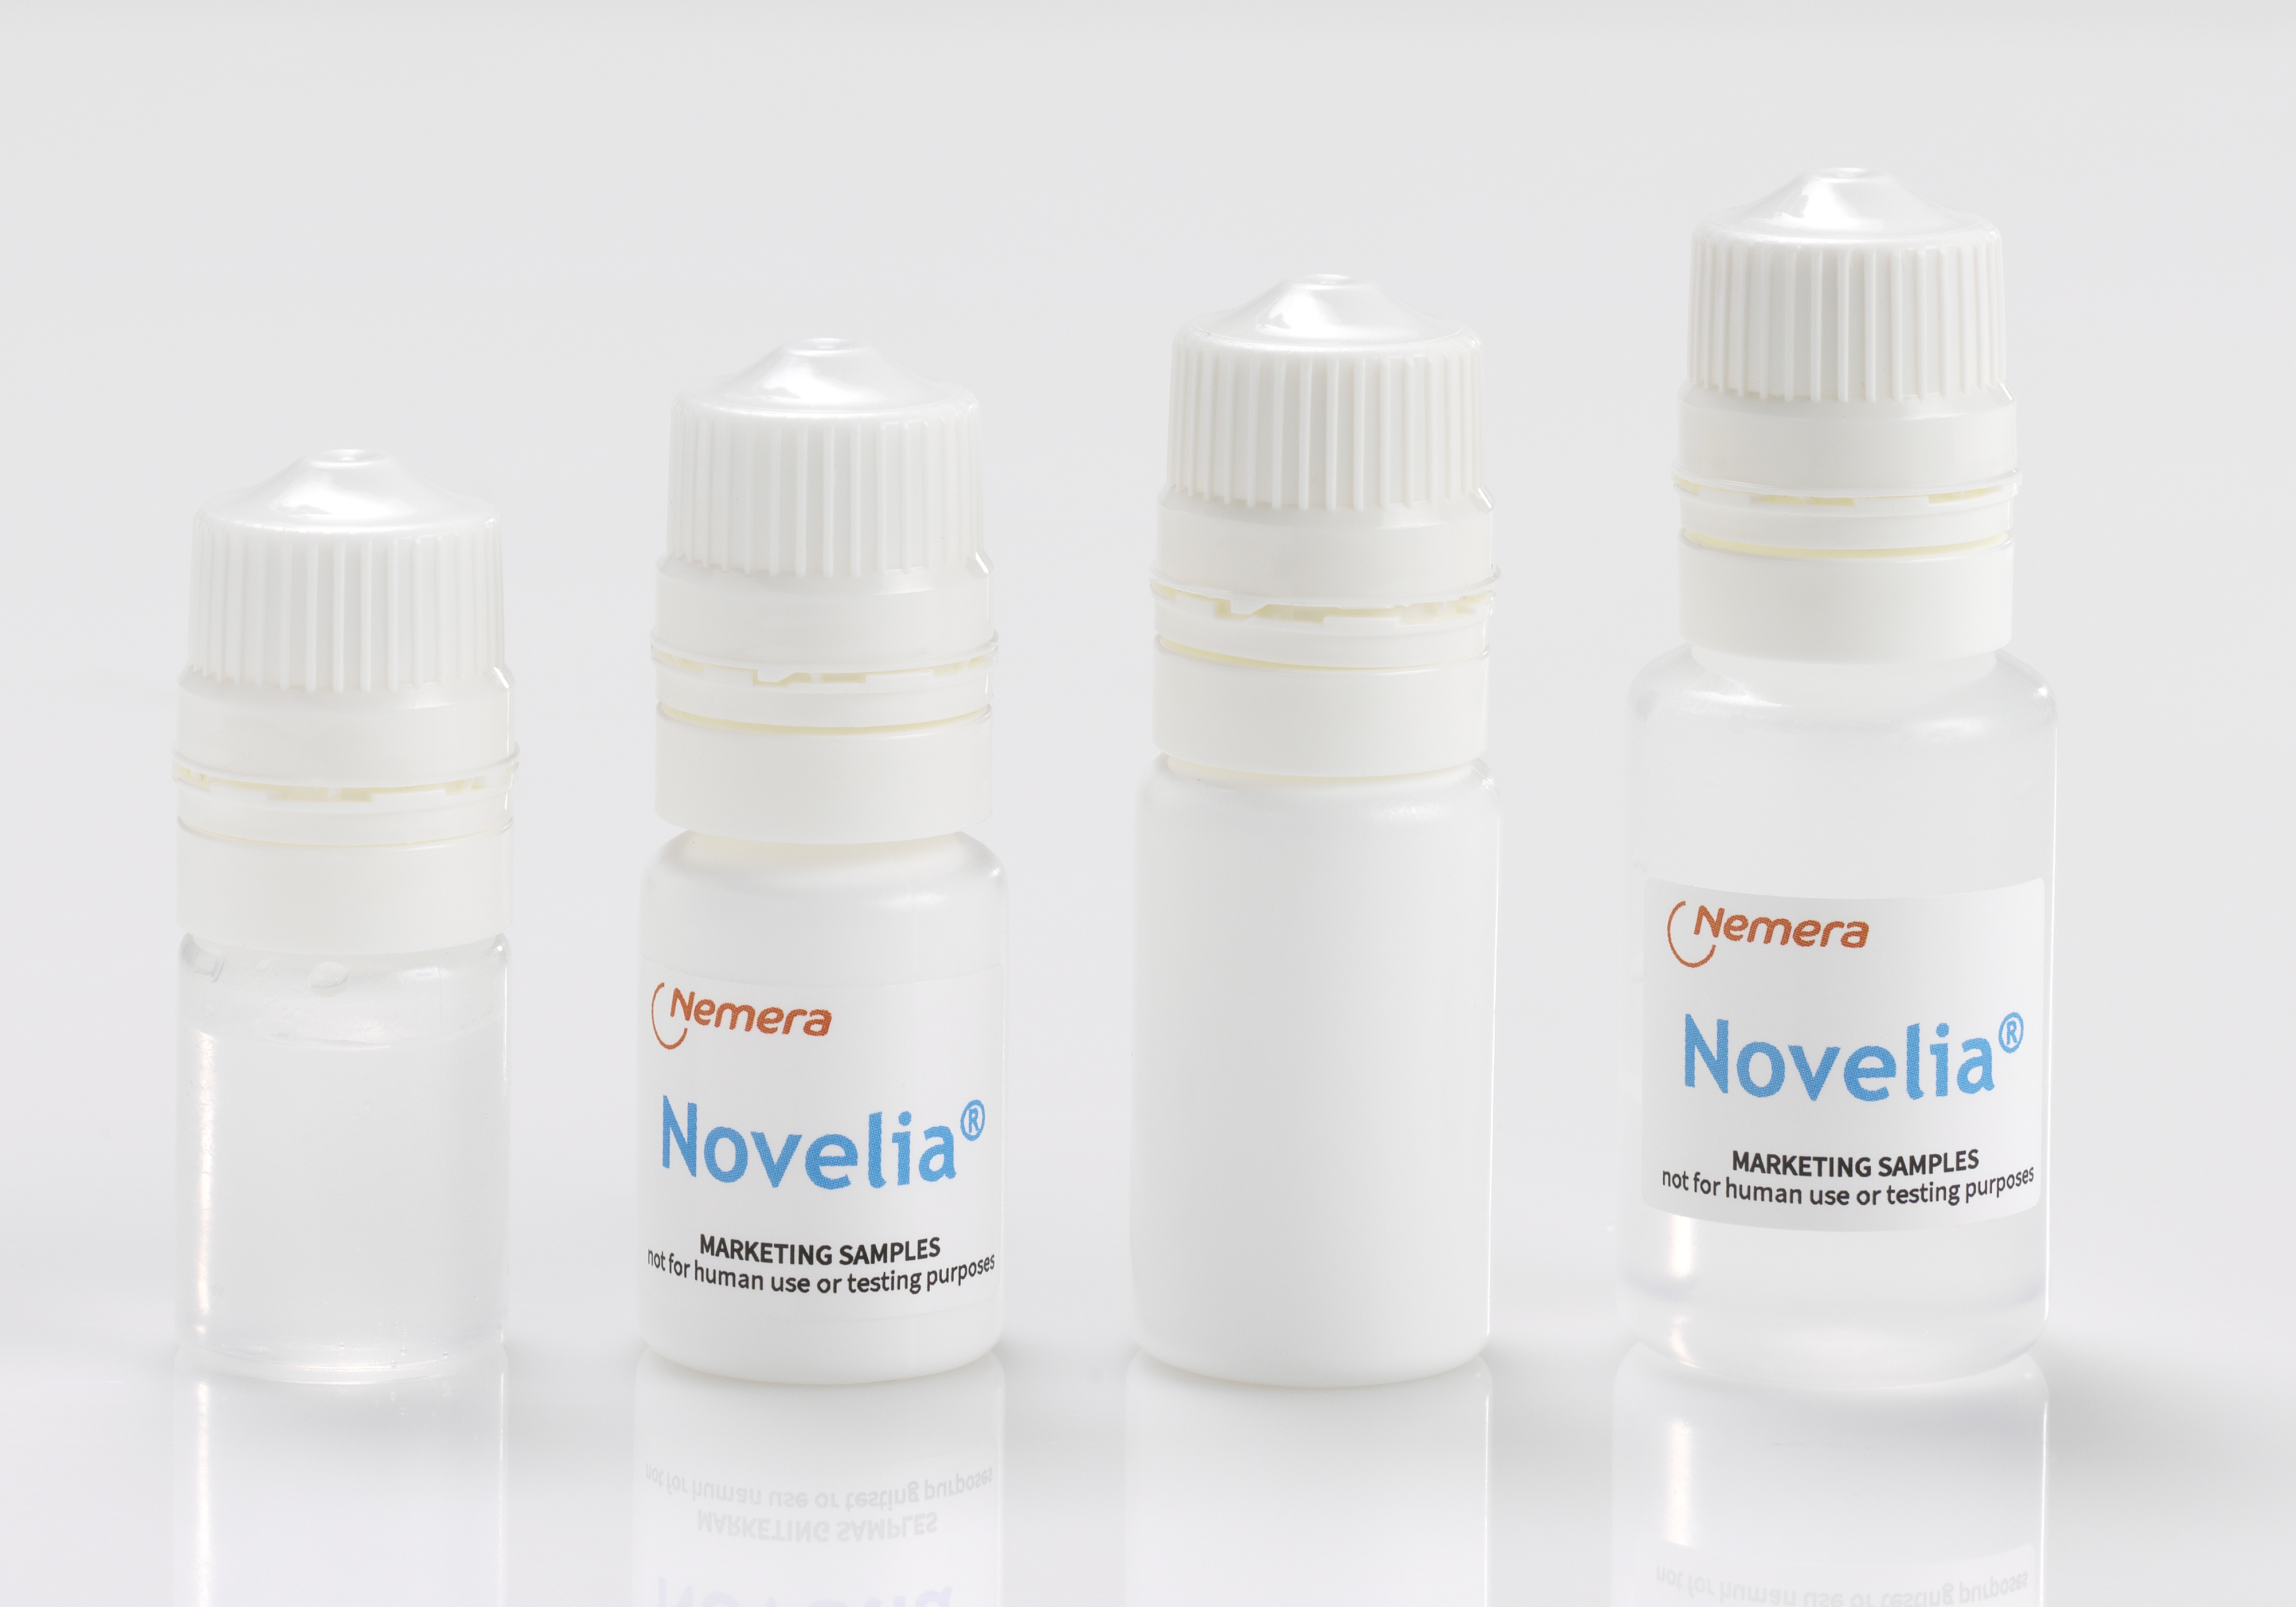 Novelia®: Nemera’s preservative-free multidose eyedropper